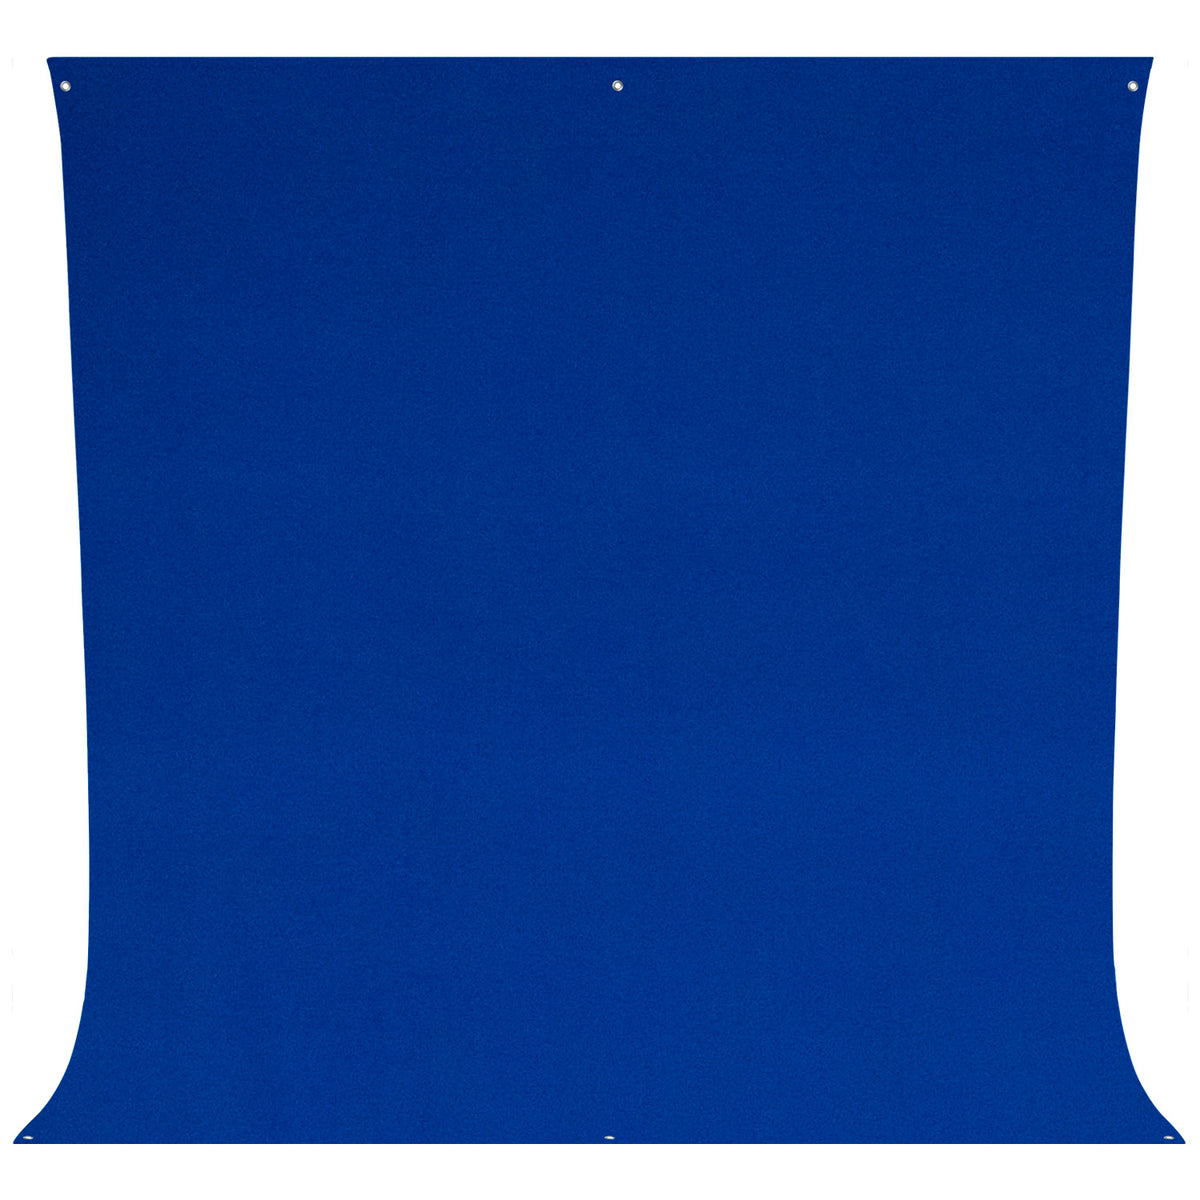 Wrinkle-Resistant Backdrop - Chroma-Key Blue/Royal Blue (9' x 10')